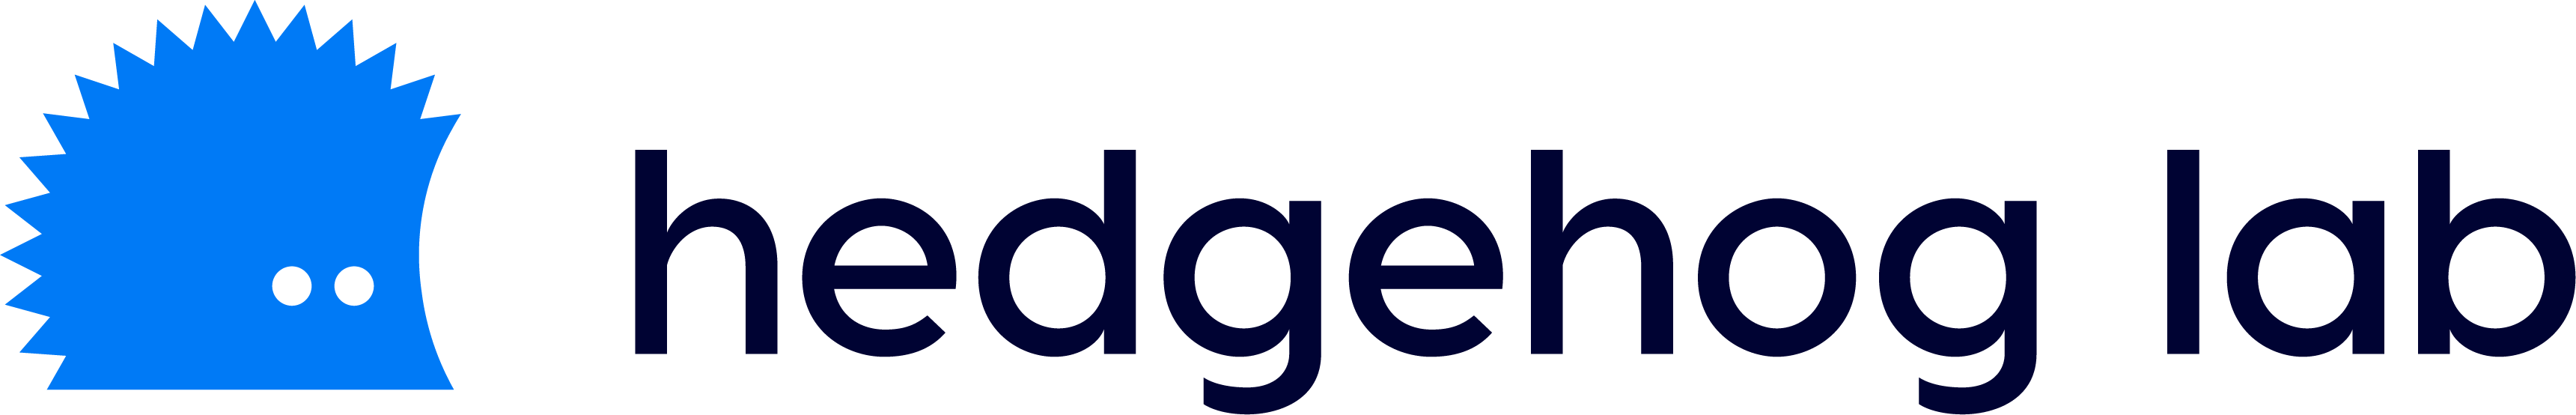 hedgehog lab logo